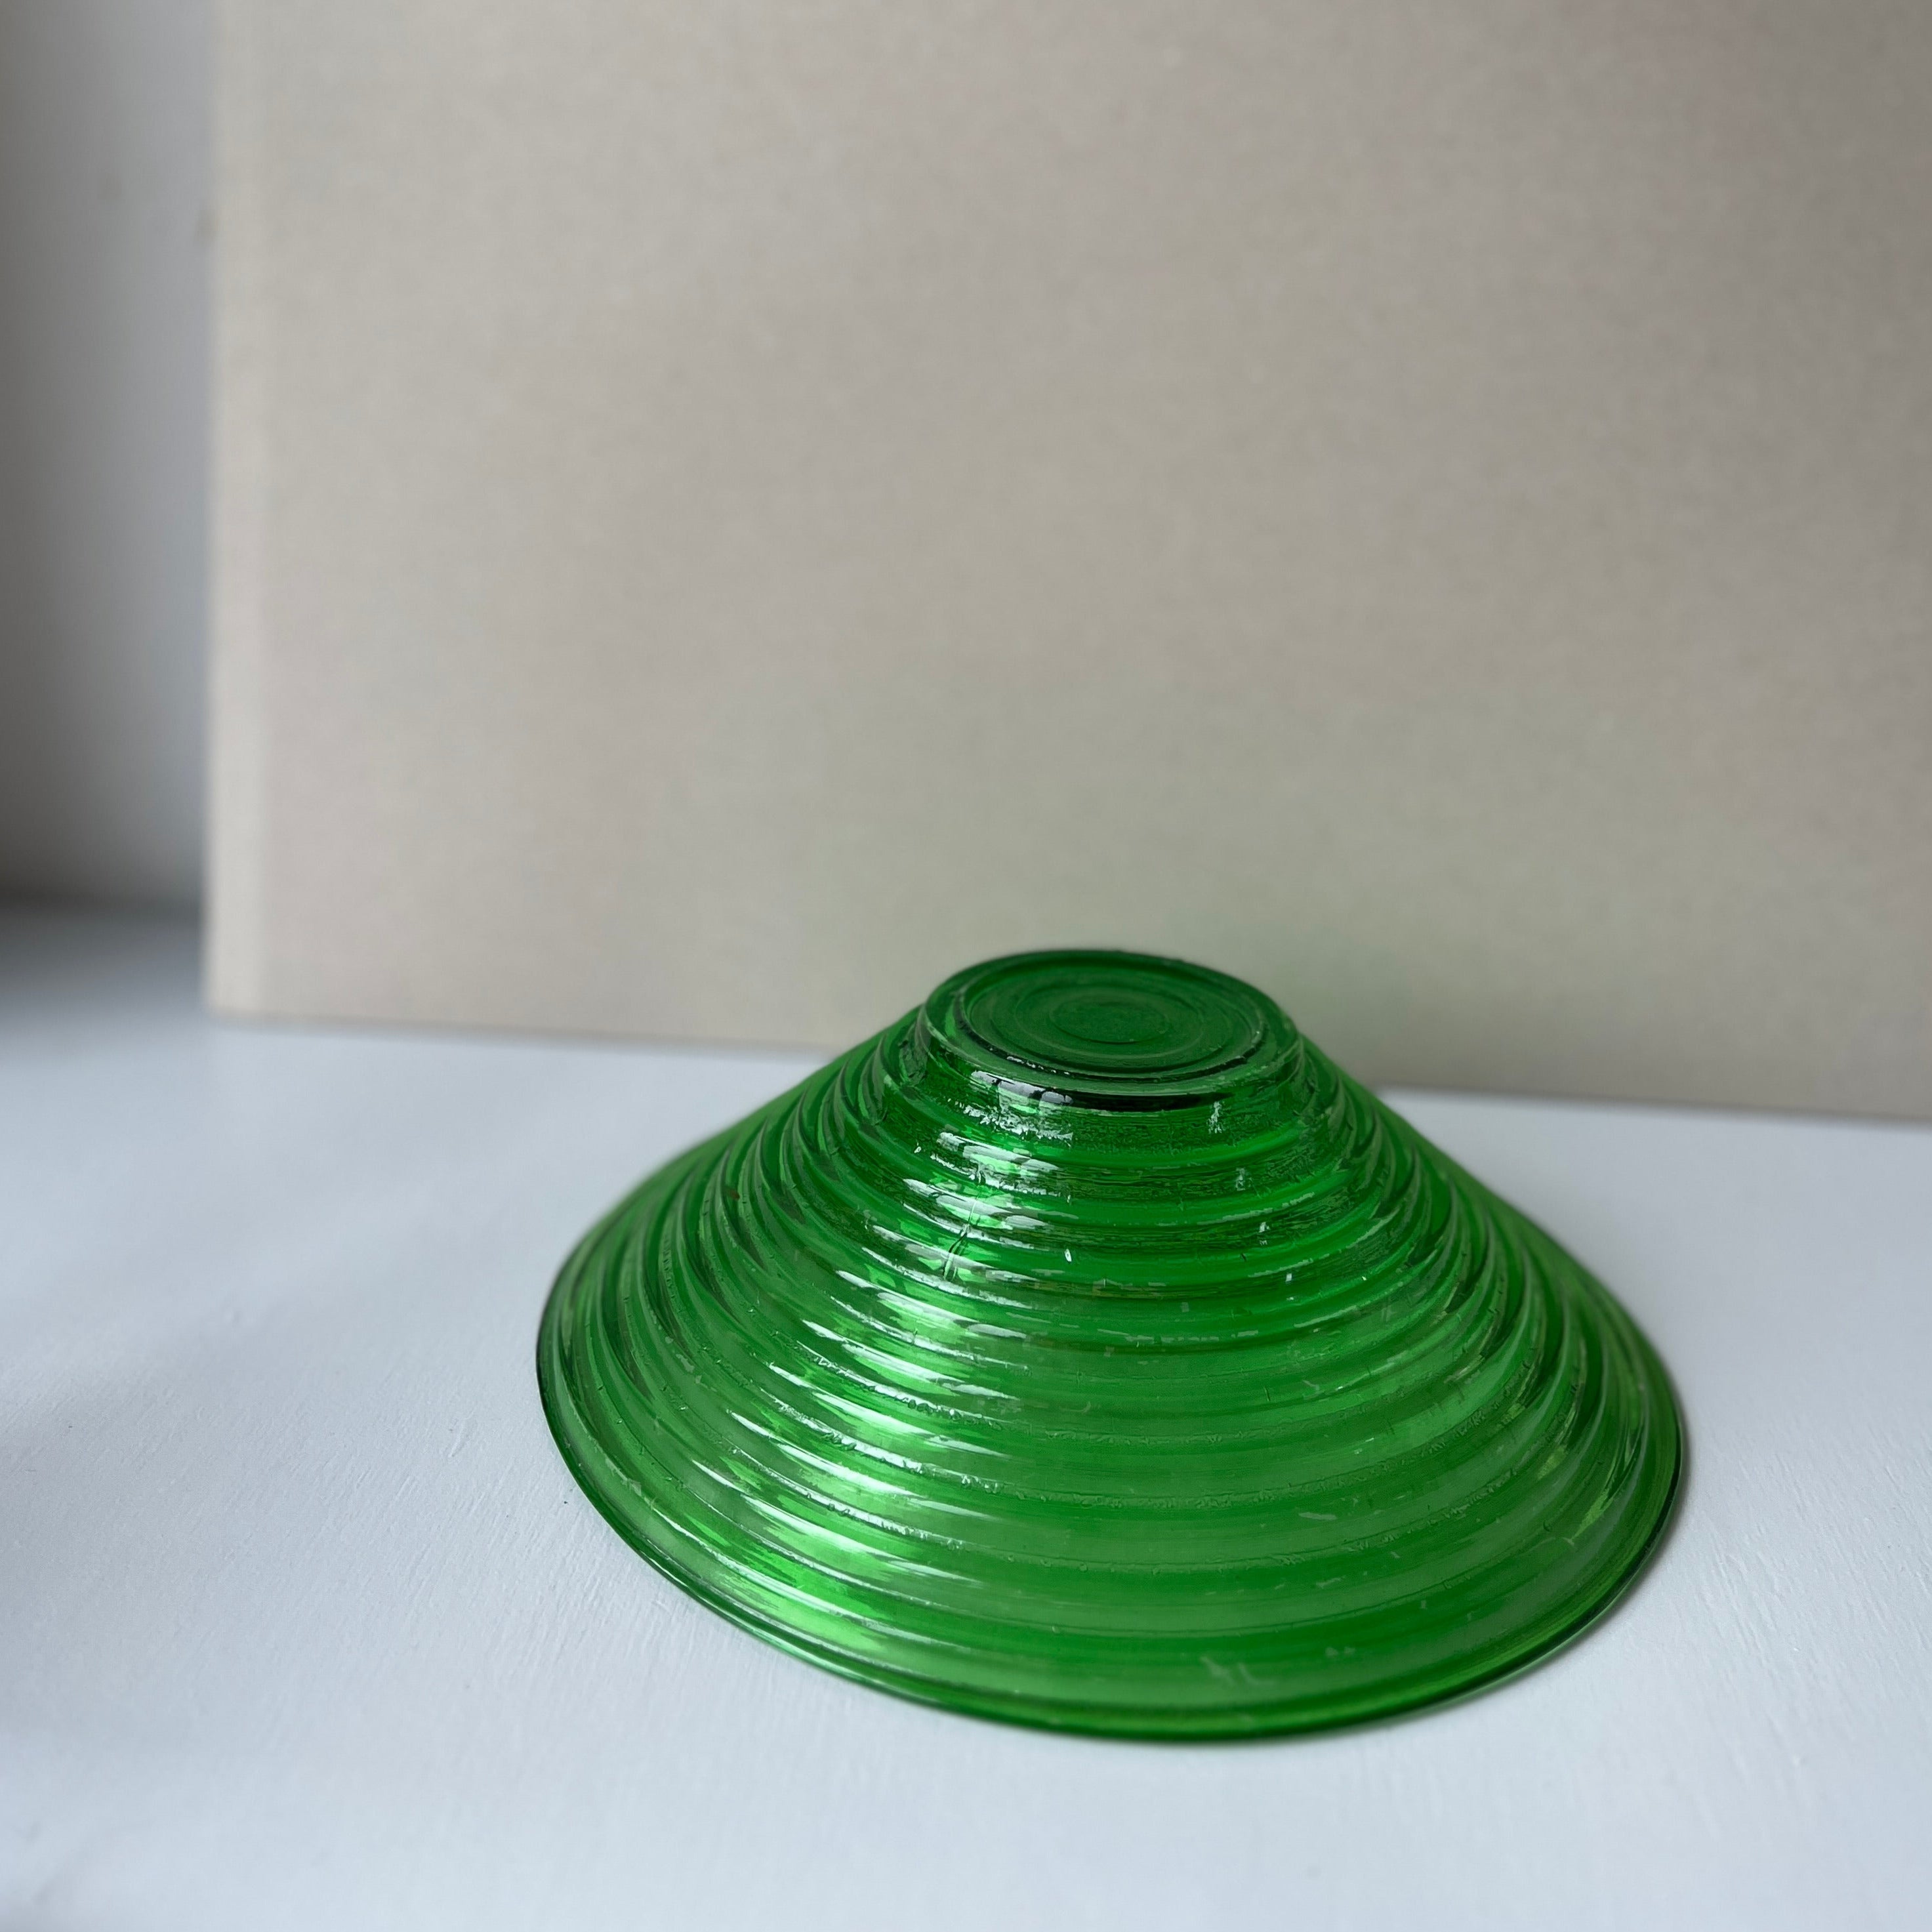 Green vintage glass bowl